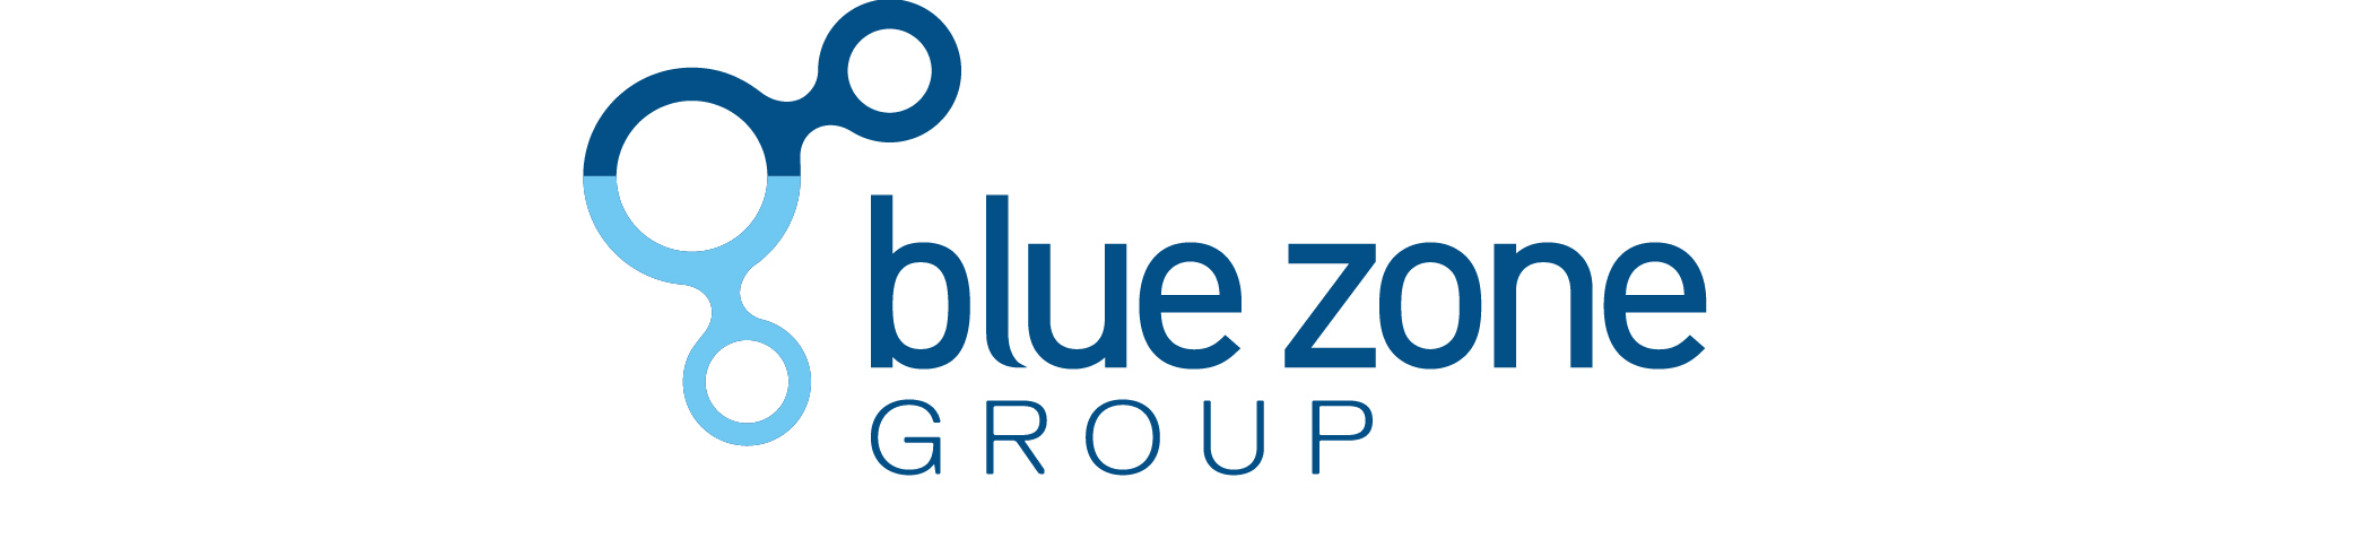 bluezone-logo-03.jpg